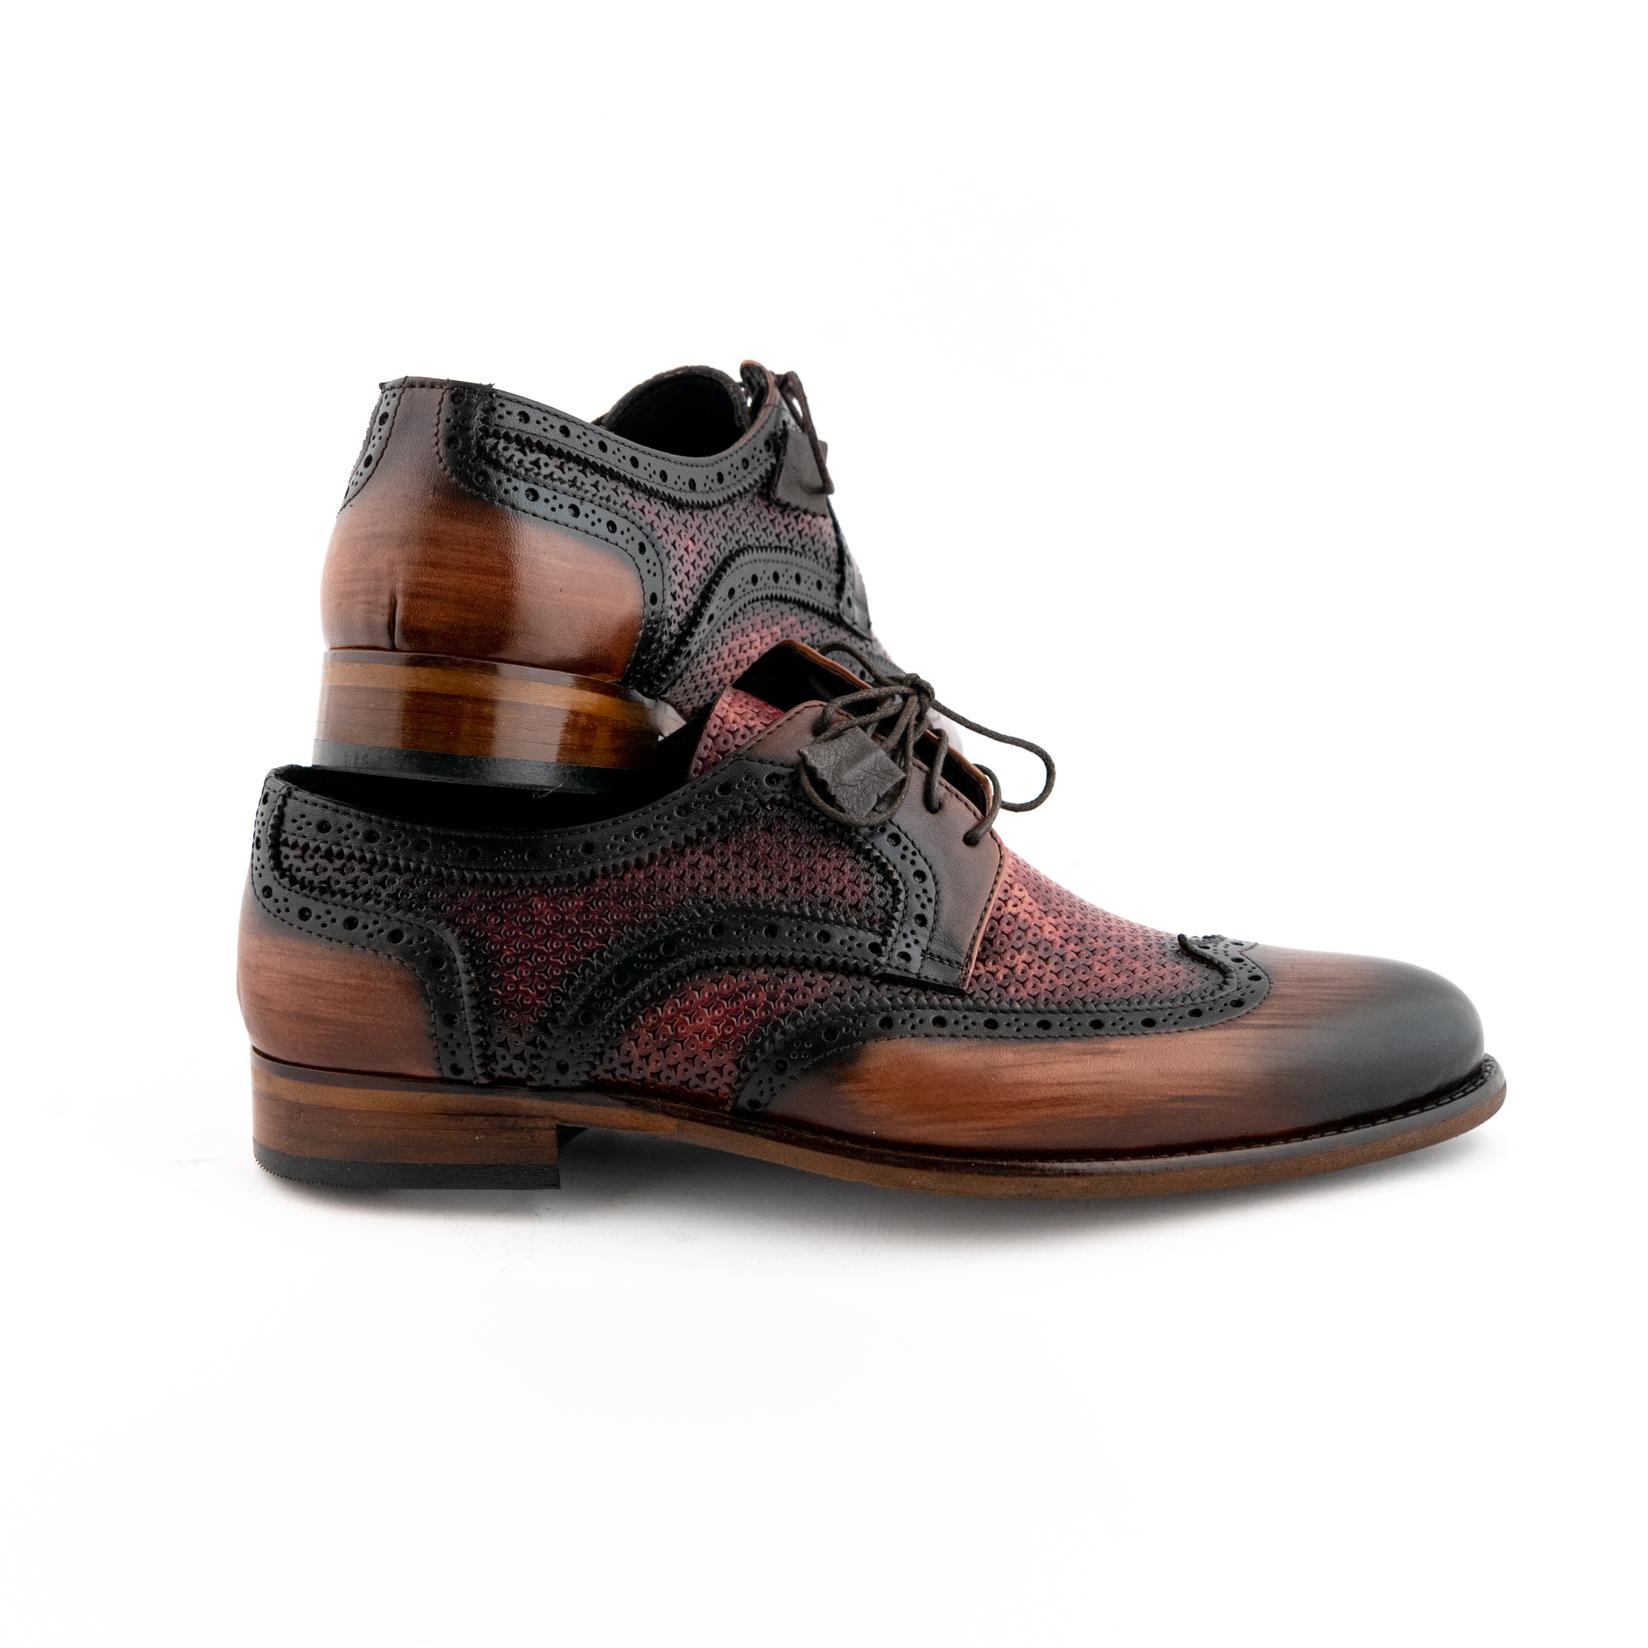 Selected image for SANTOS & SANTORINI Muške cipele Frederico braon